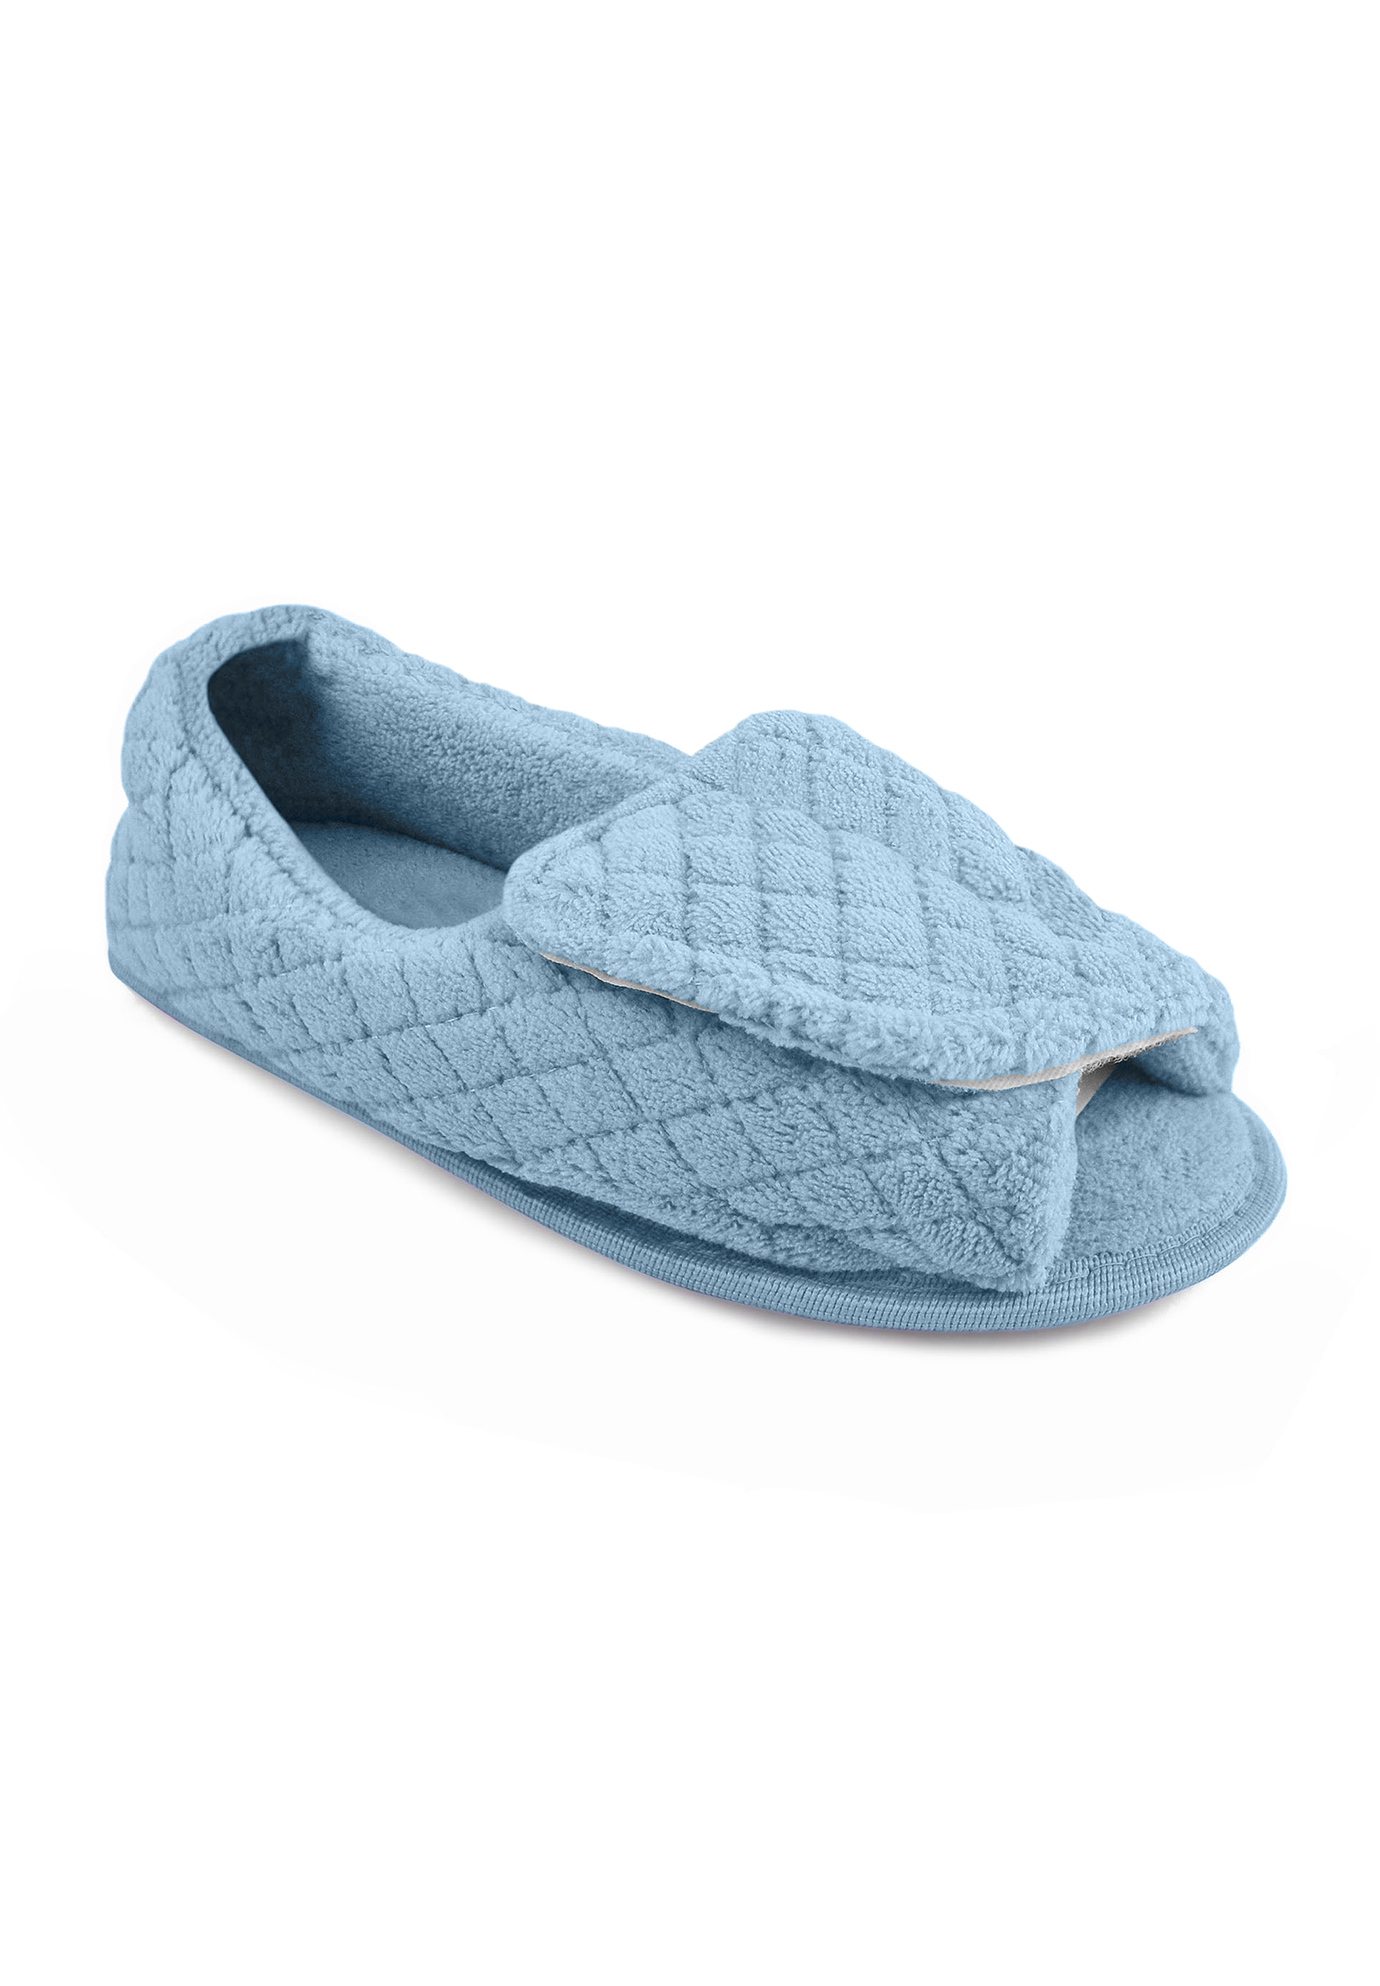 adjustable slippers